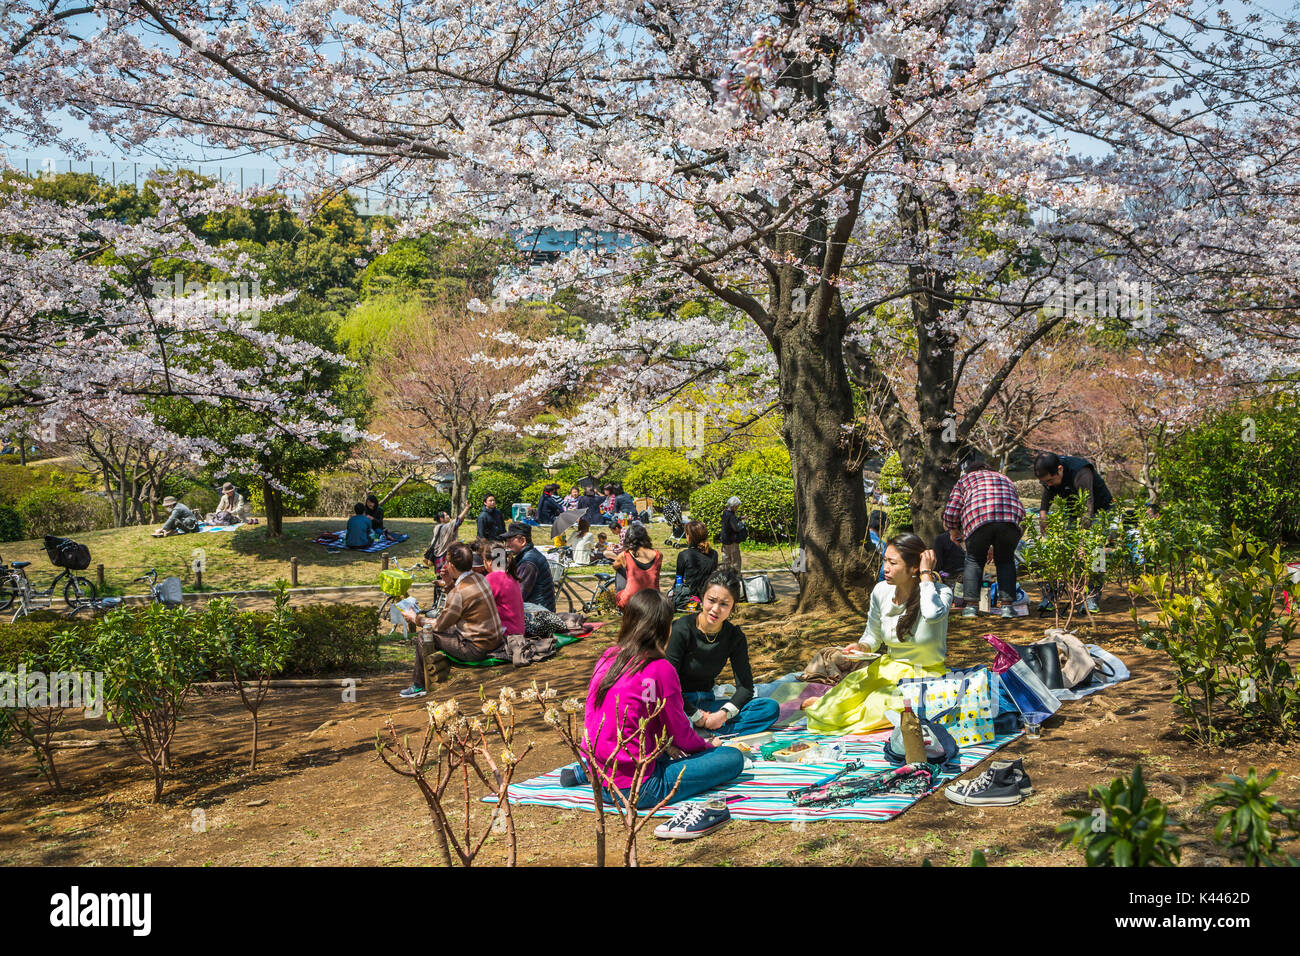 Japanese people having a picnic under cherry blossom trees in Sumida Park, Asakusa, Tokyo, Japan, Asia. Stock Photo